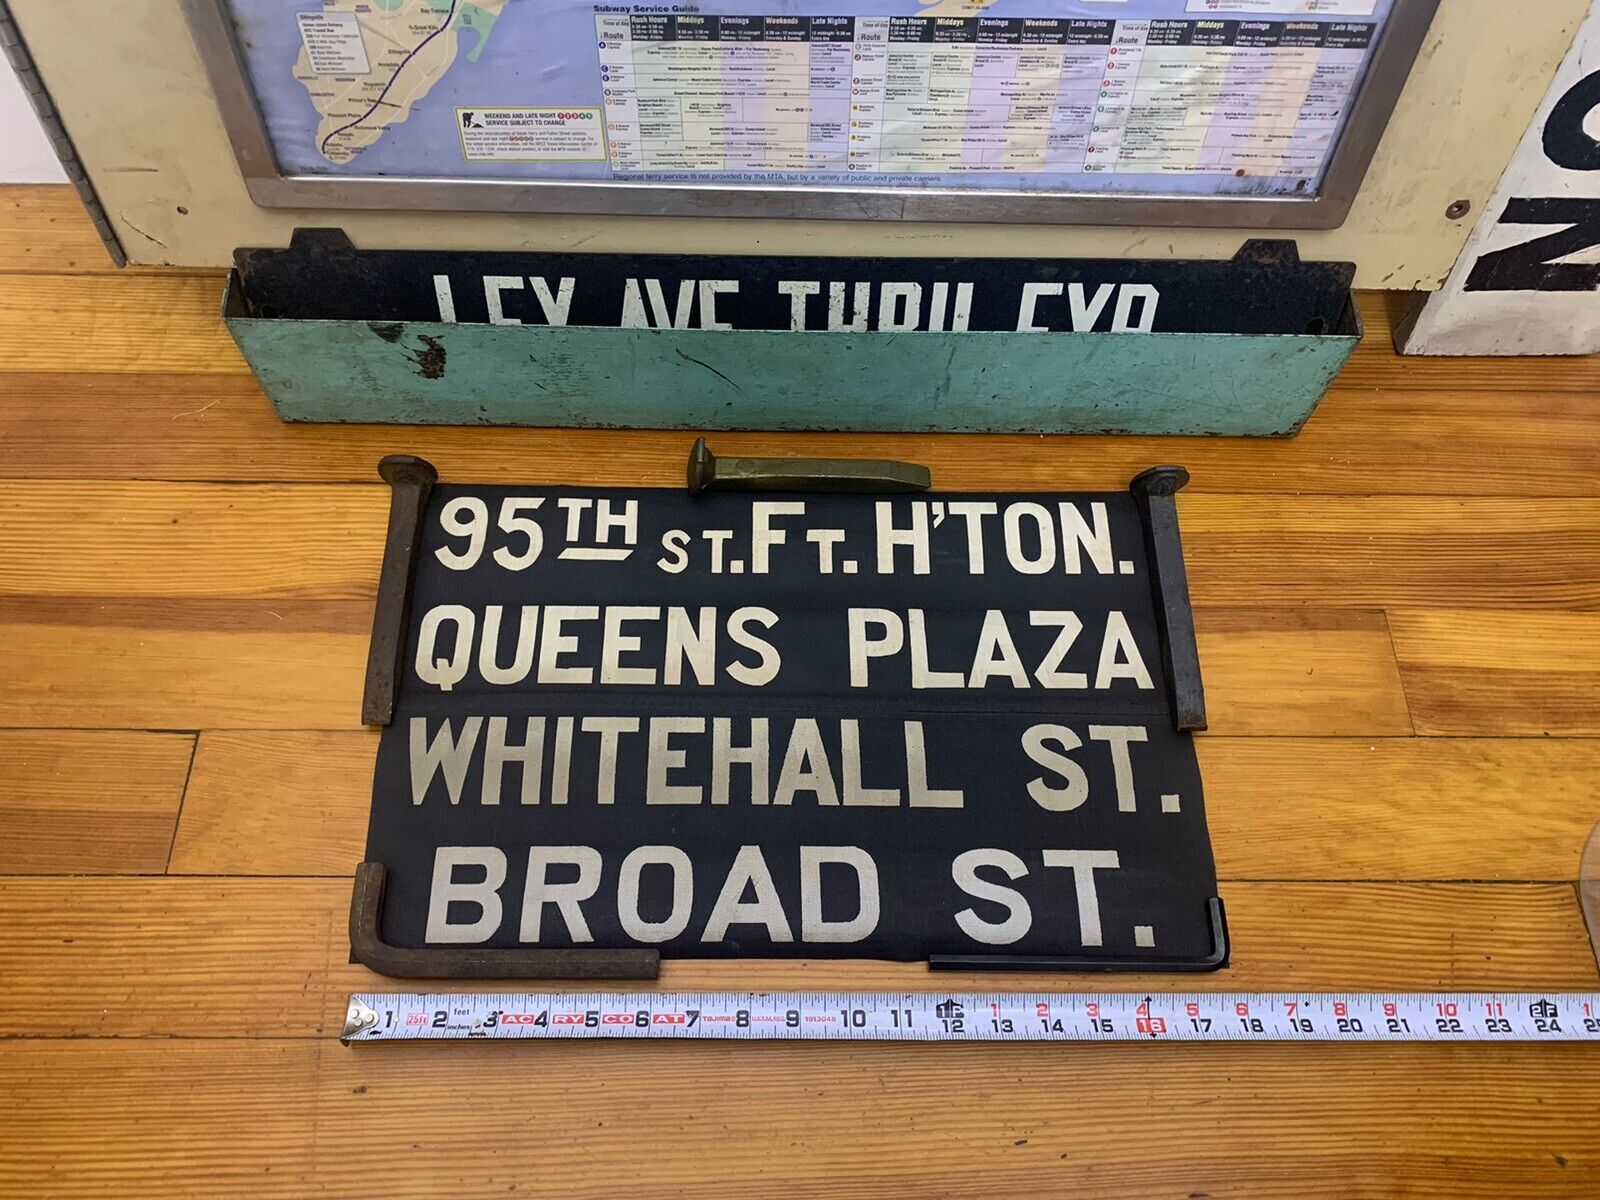 NY NYC SUBWAY BMT ROLL SIGN FORT HAMILTON BROAD STREET FINANCIAL DIST. BROOKLYN